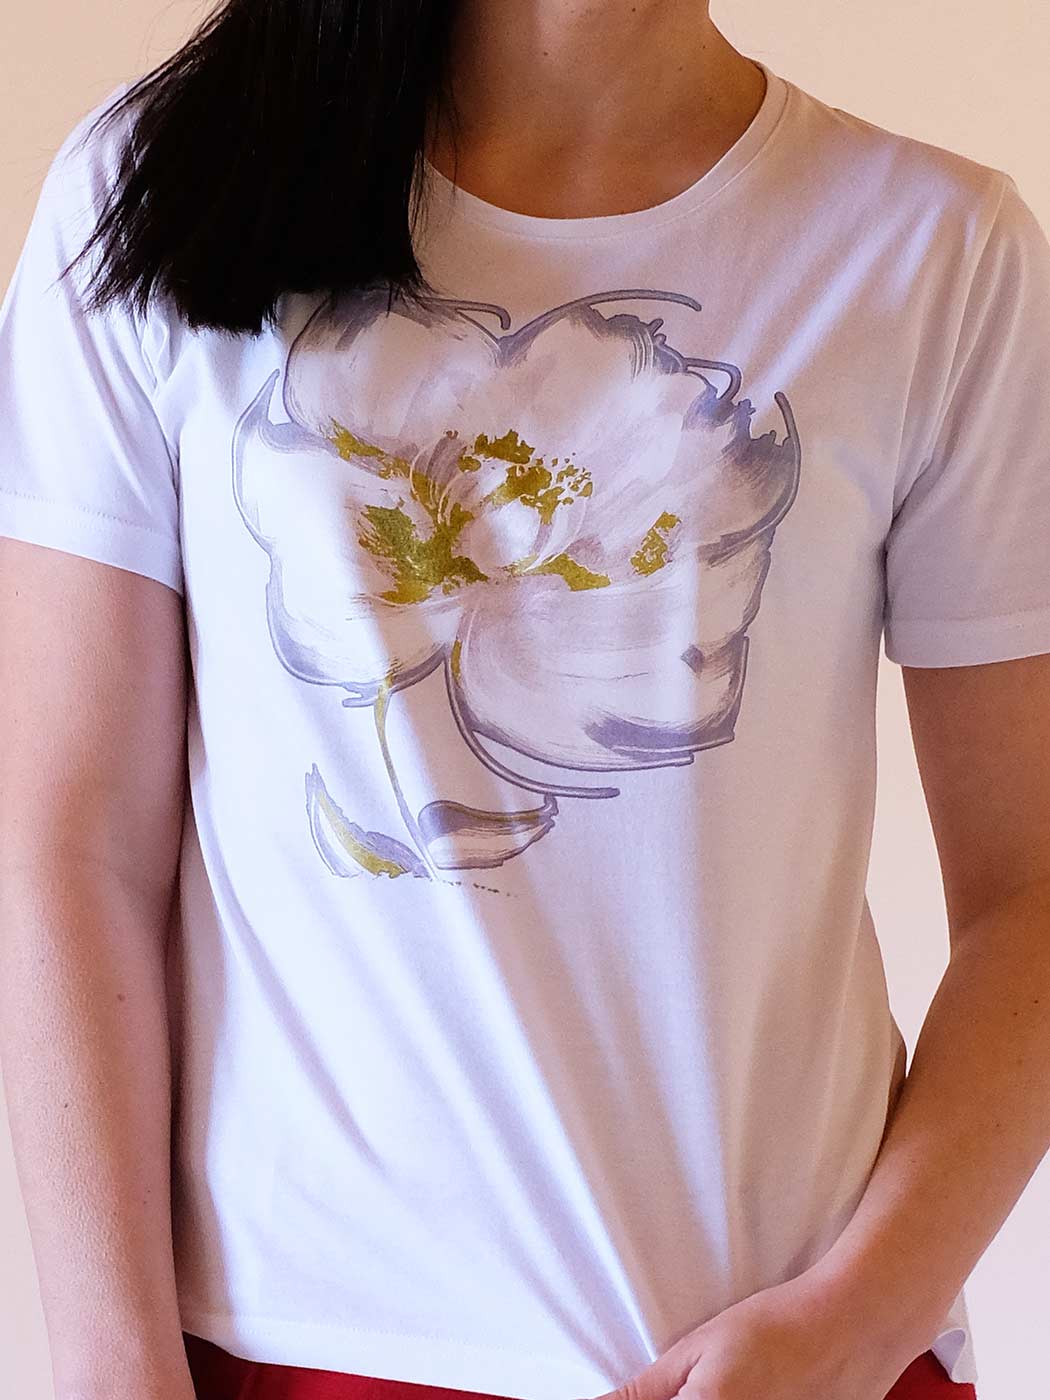 Divine Bloom T-shirt in 100% Cotton